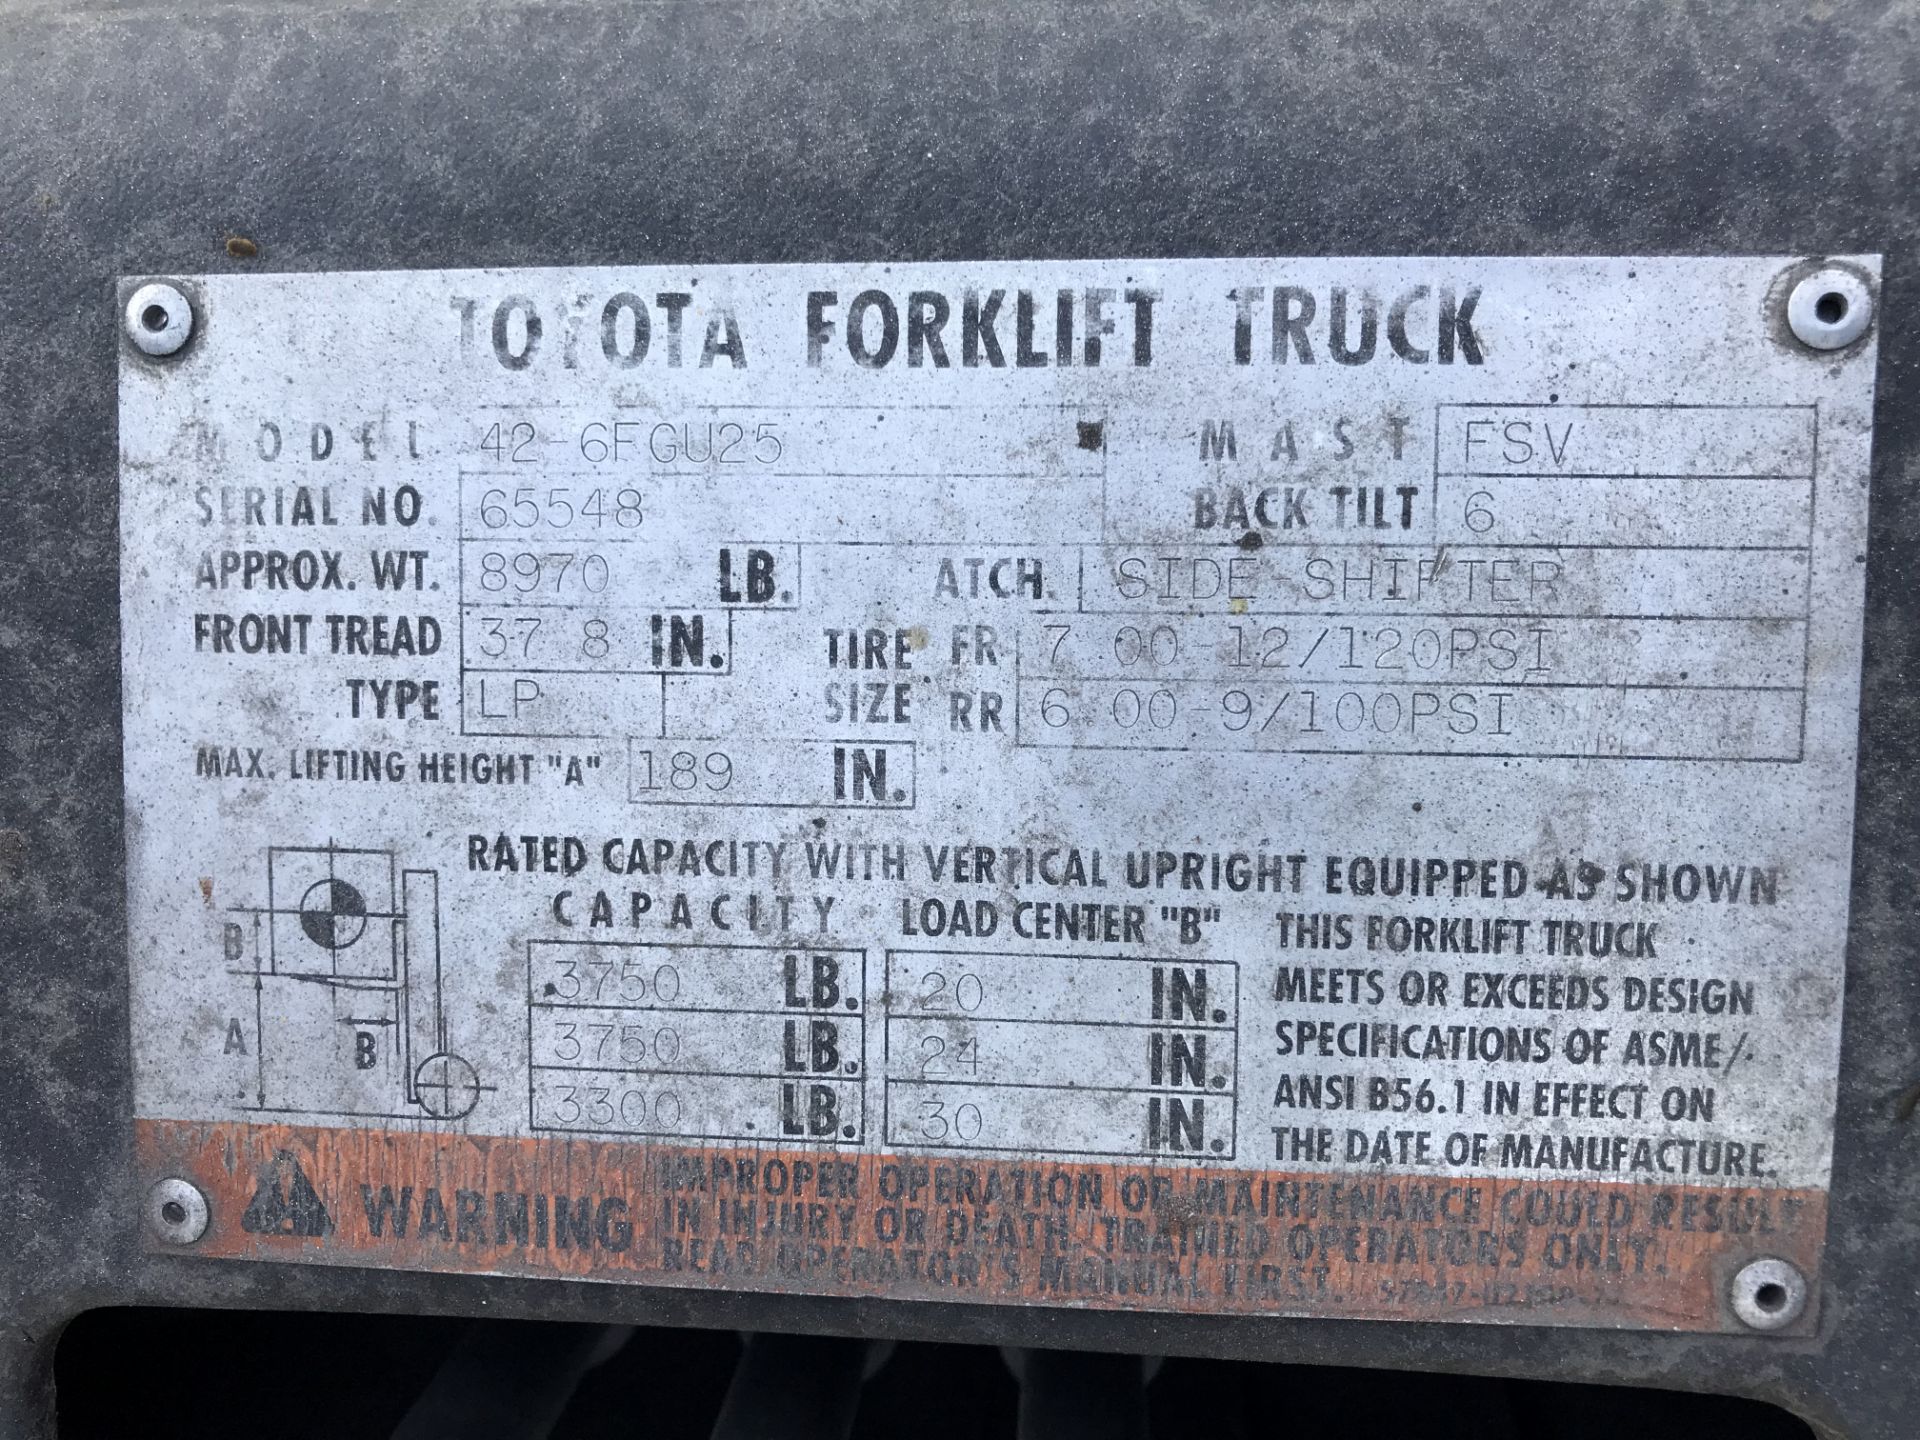 Toyota Mdl: 42-6FGU25 Fork Lift Truck , S/N: 65548 - Image 6 of 6